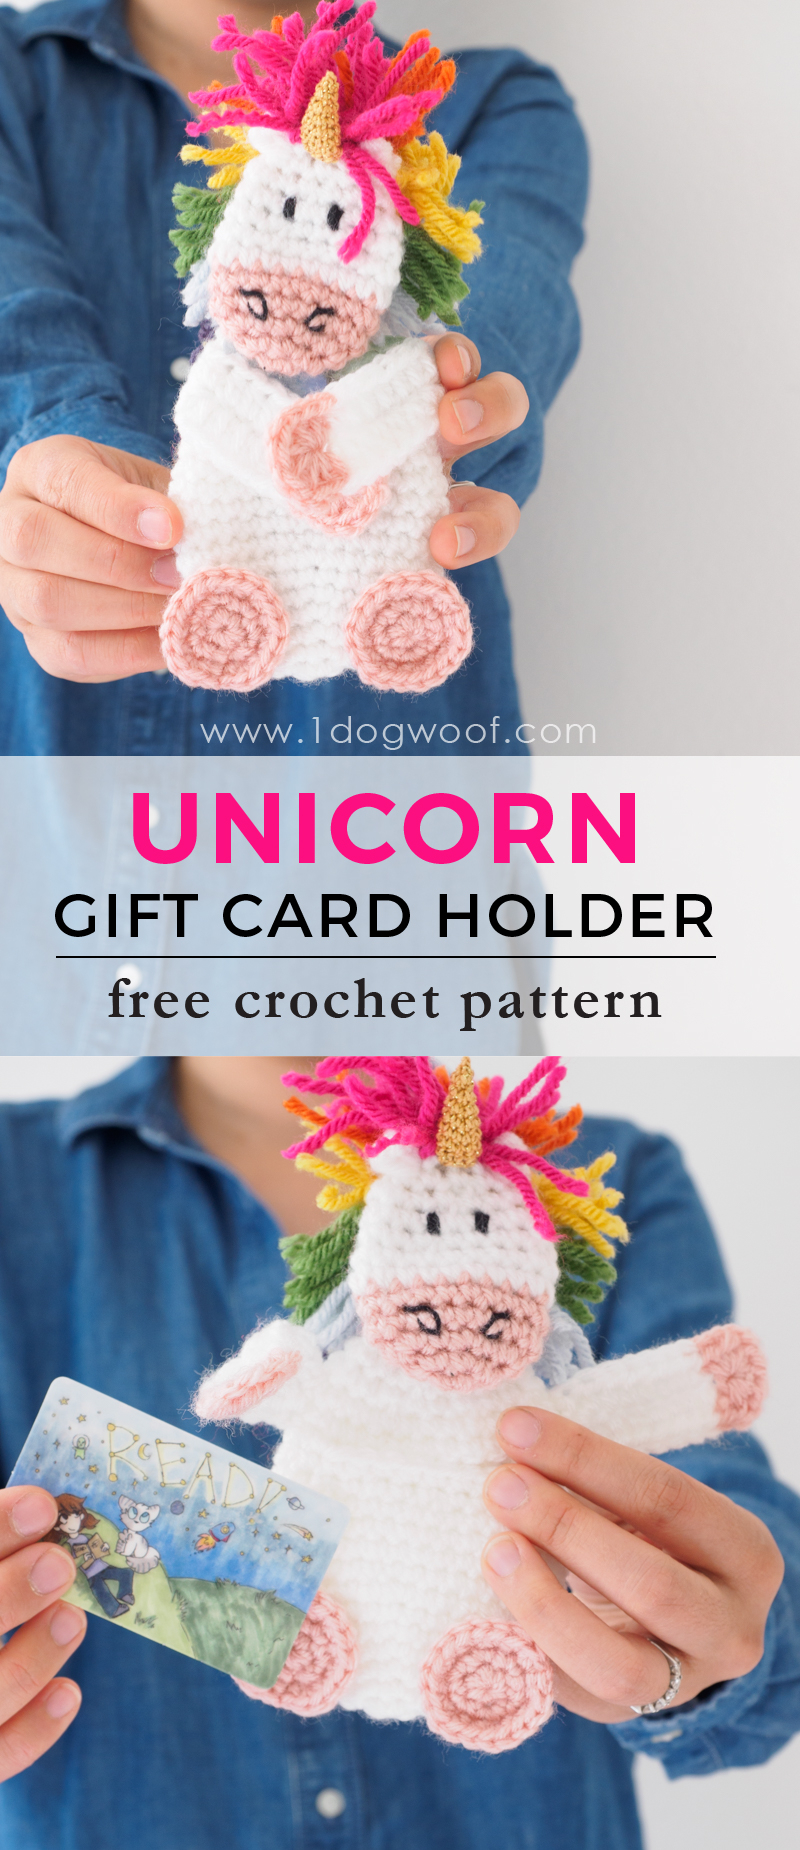 Unicorn Crochet Pattern Free Crochet Unicorn Gift Card Holder One Dog Woof